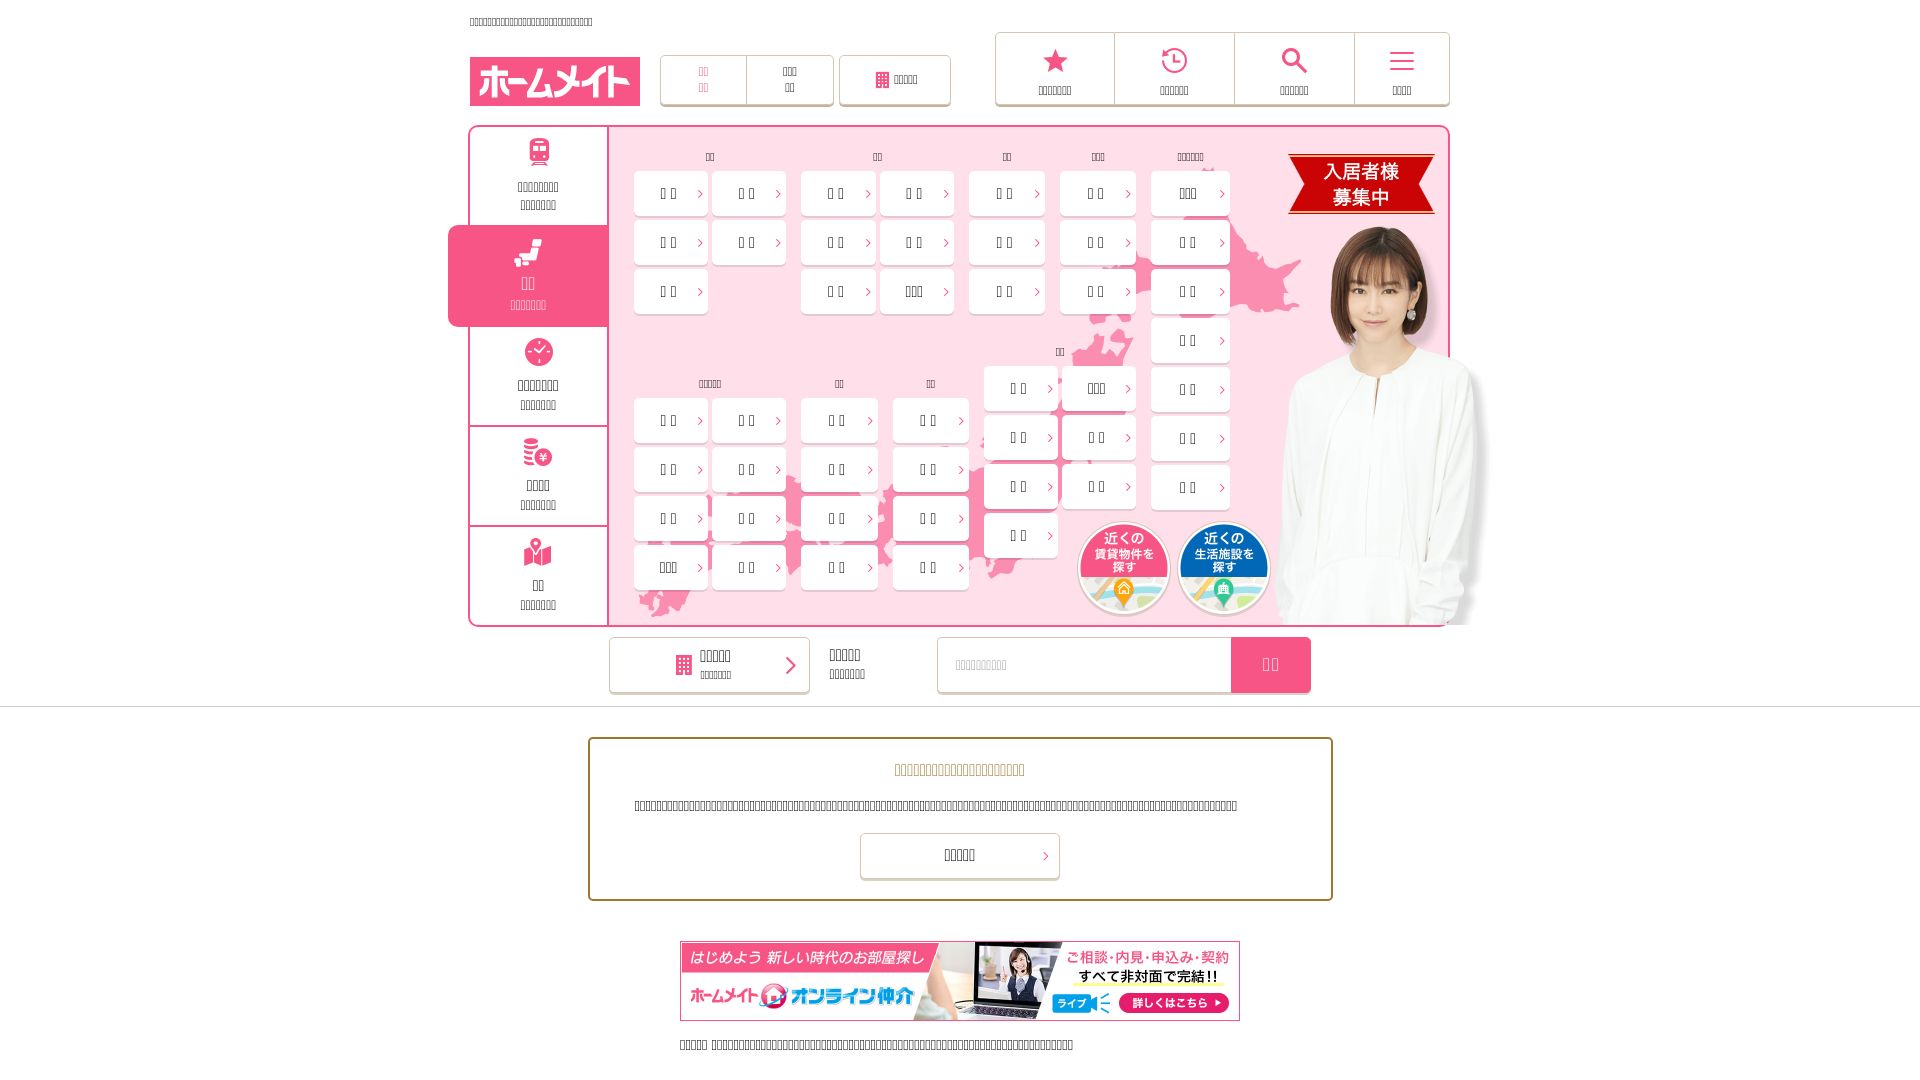 Website status homemate.co.jp is   ONLINE